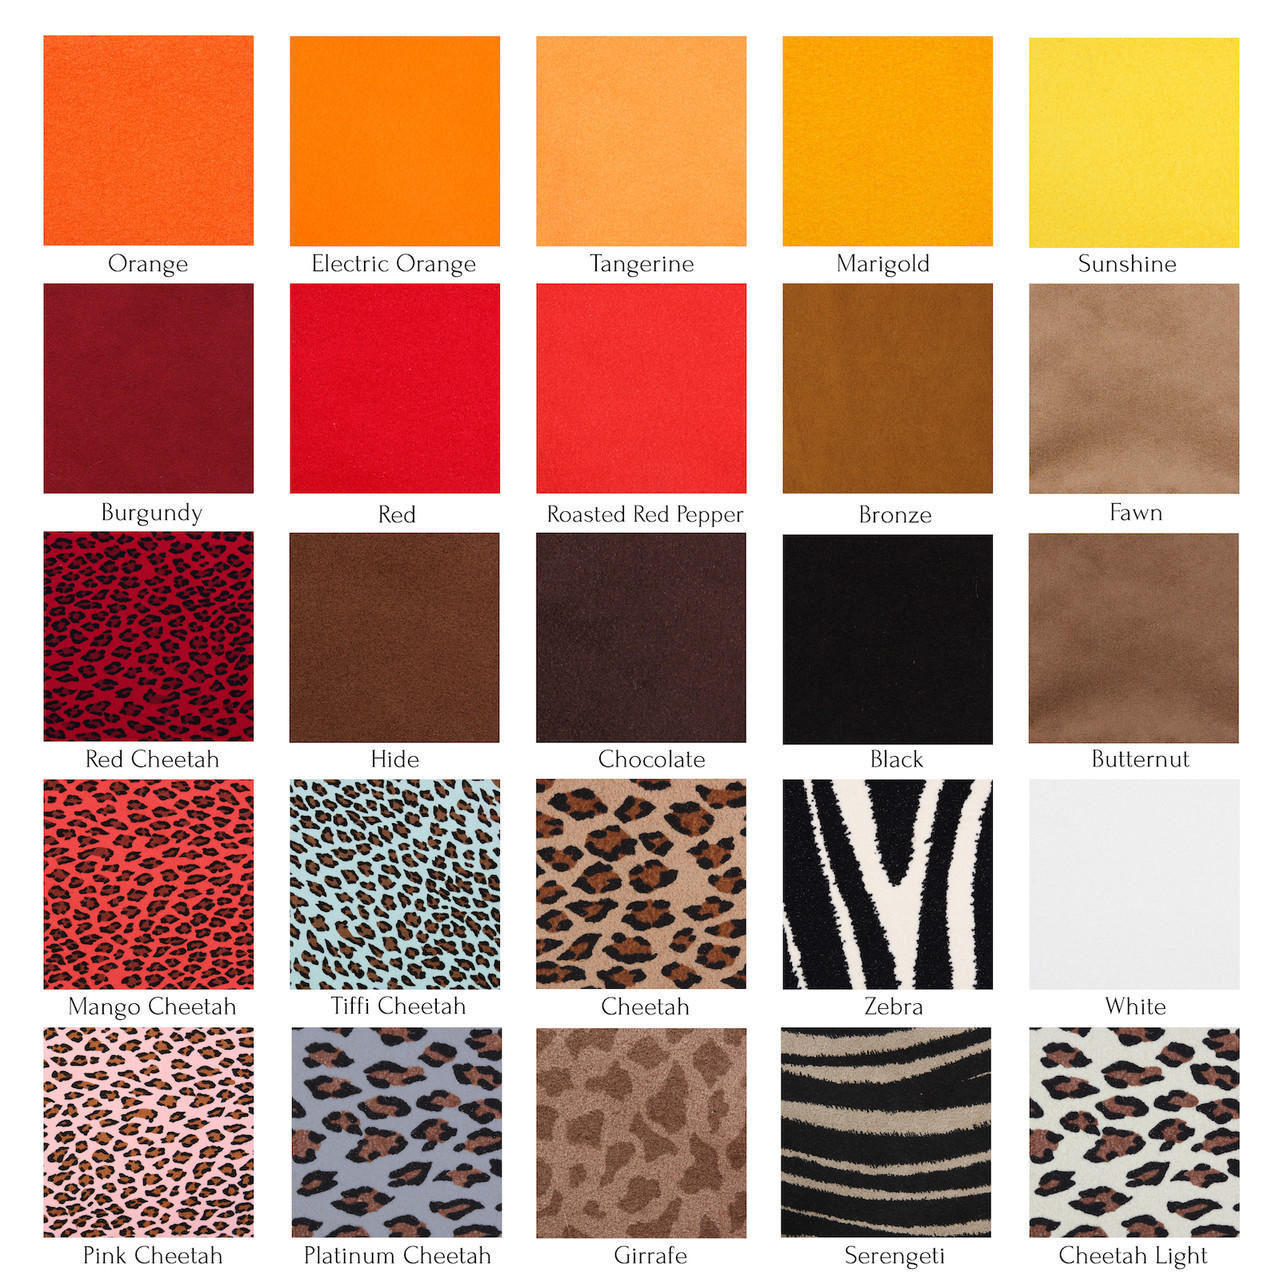  Susan Lanci Cheetah Couture 3 Row Giltmore Collar 